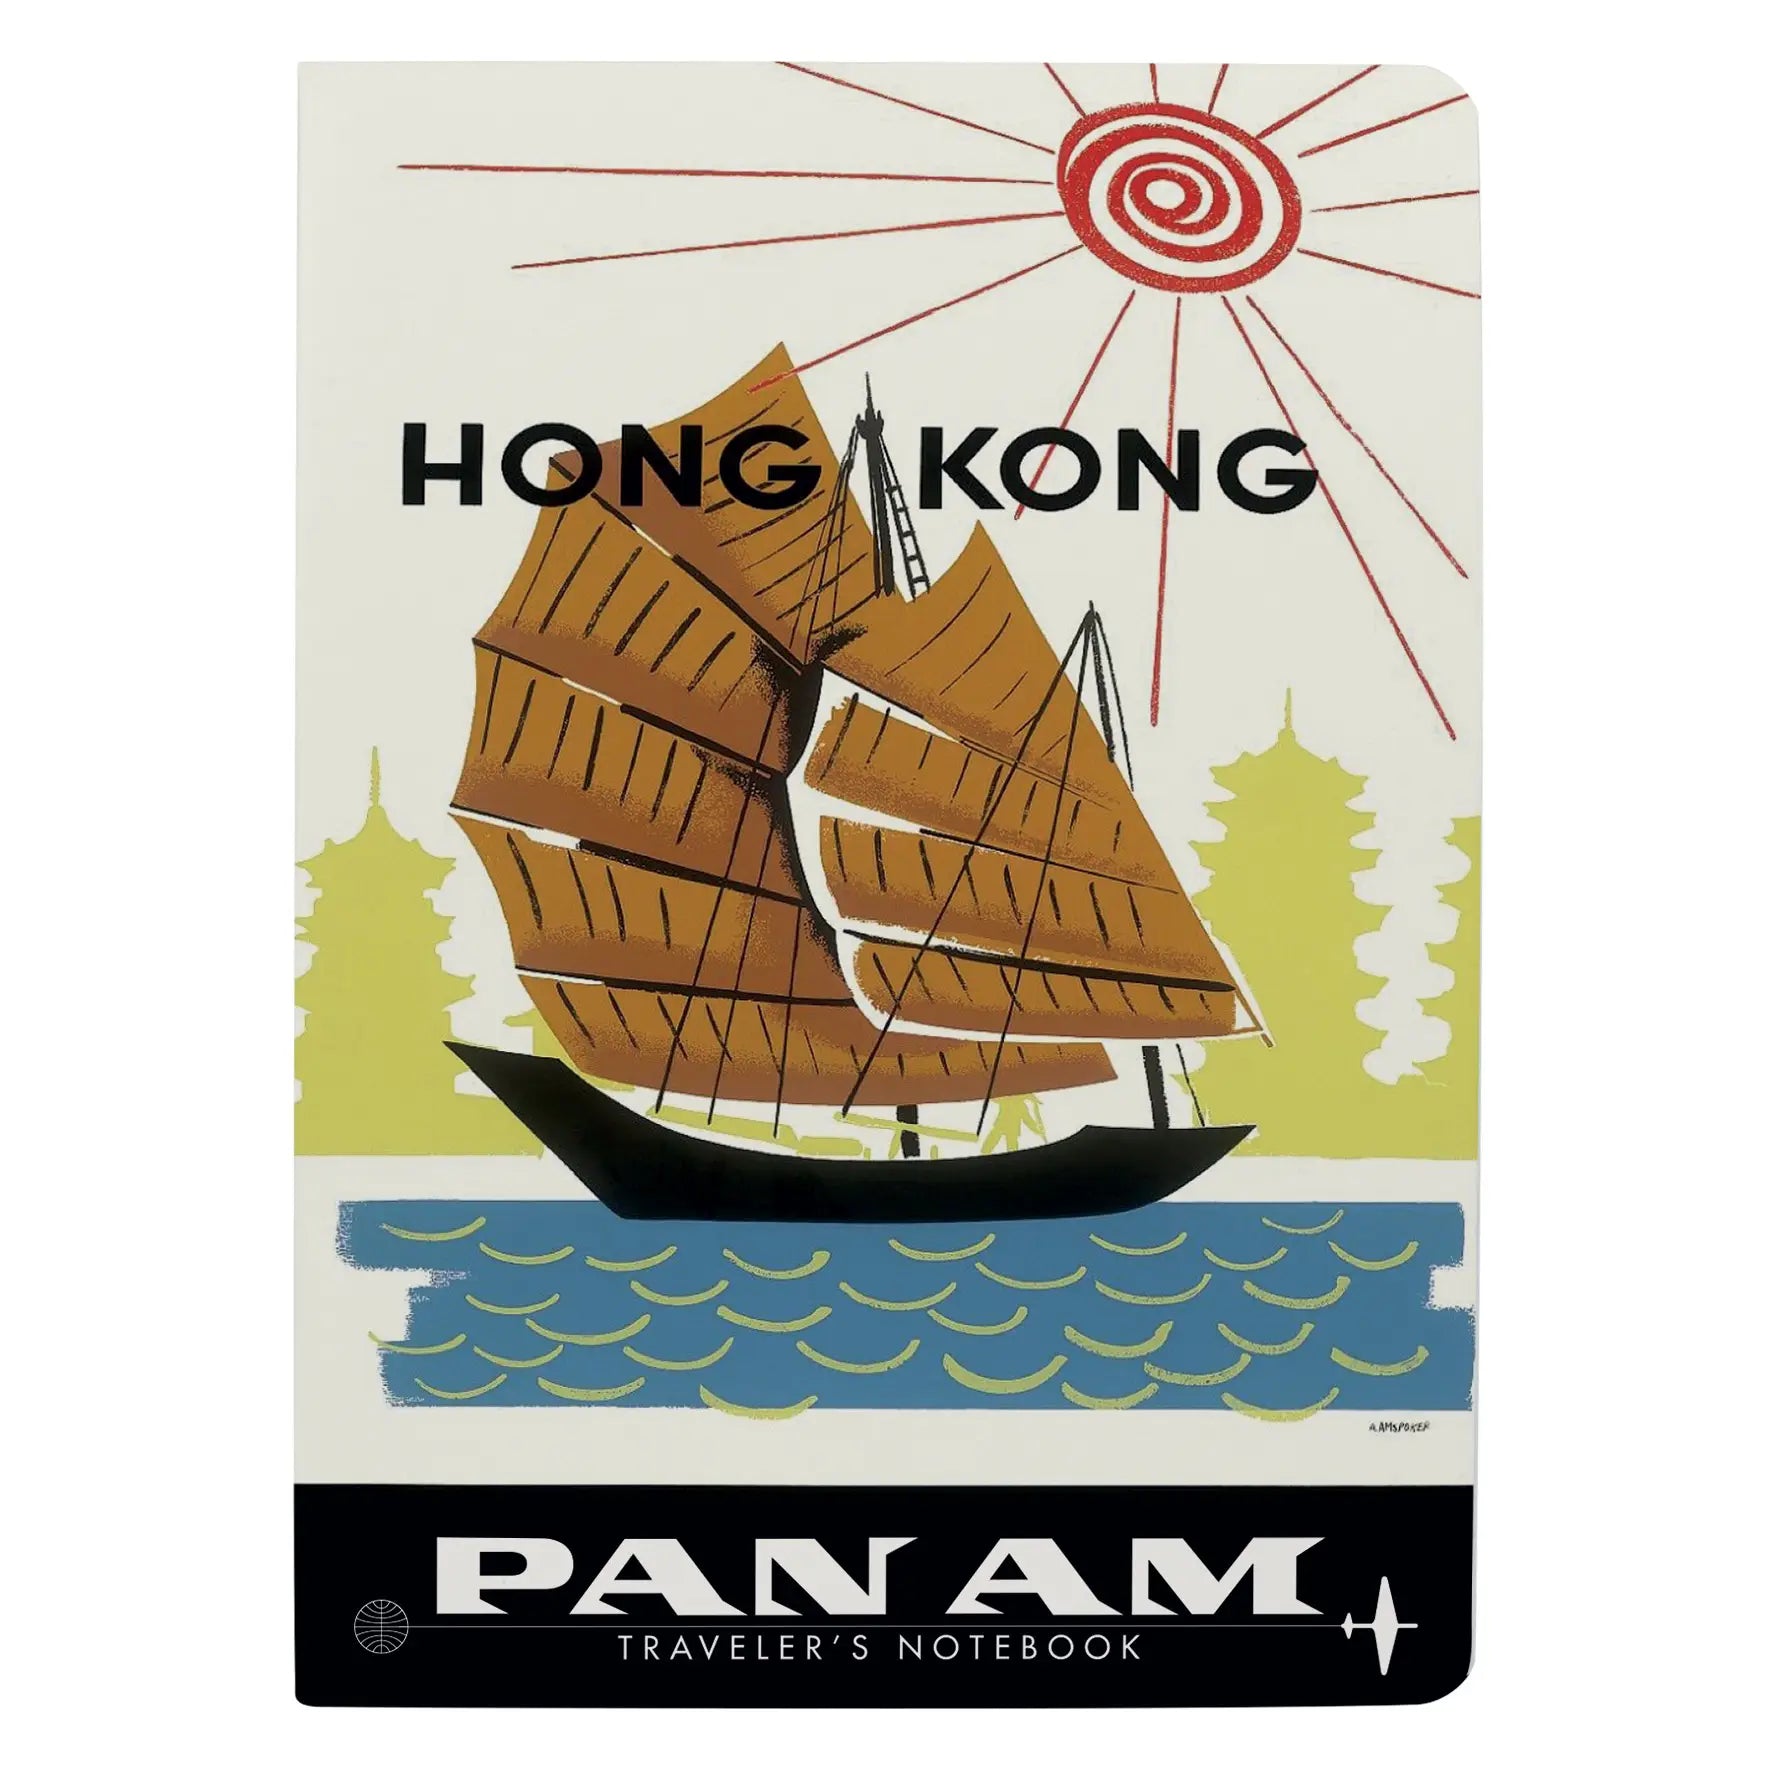 Pan Am Hong Kong Mini Notebook